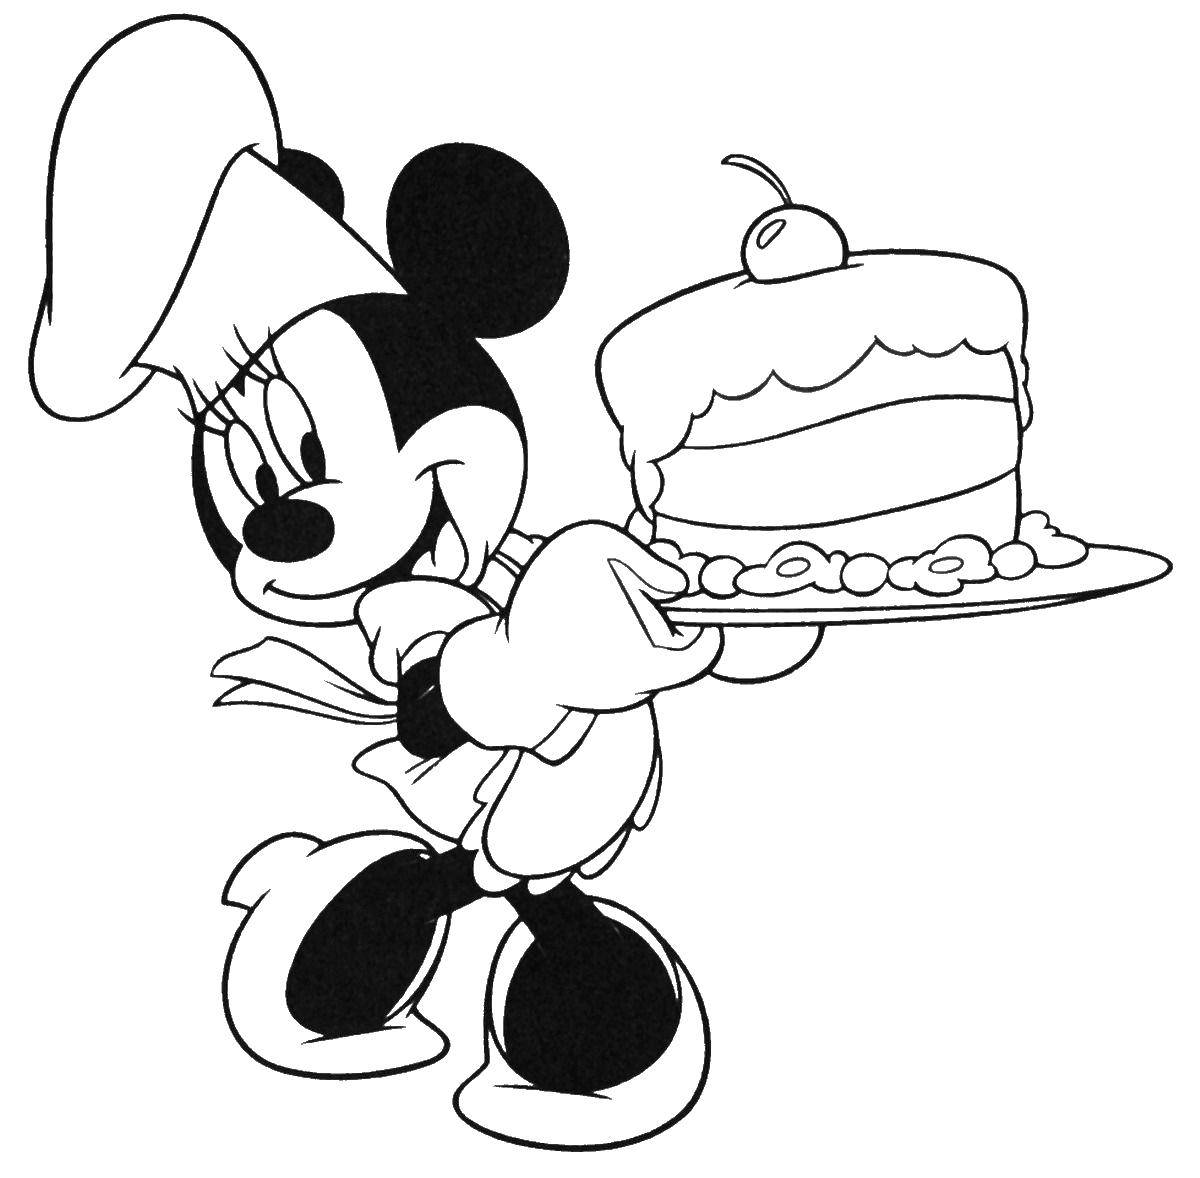 Coloring Minnie cake. Category Disney cartoons. Tags:  the cake.